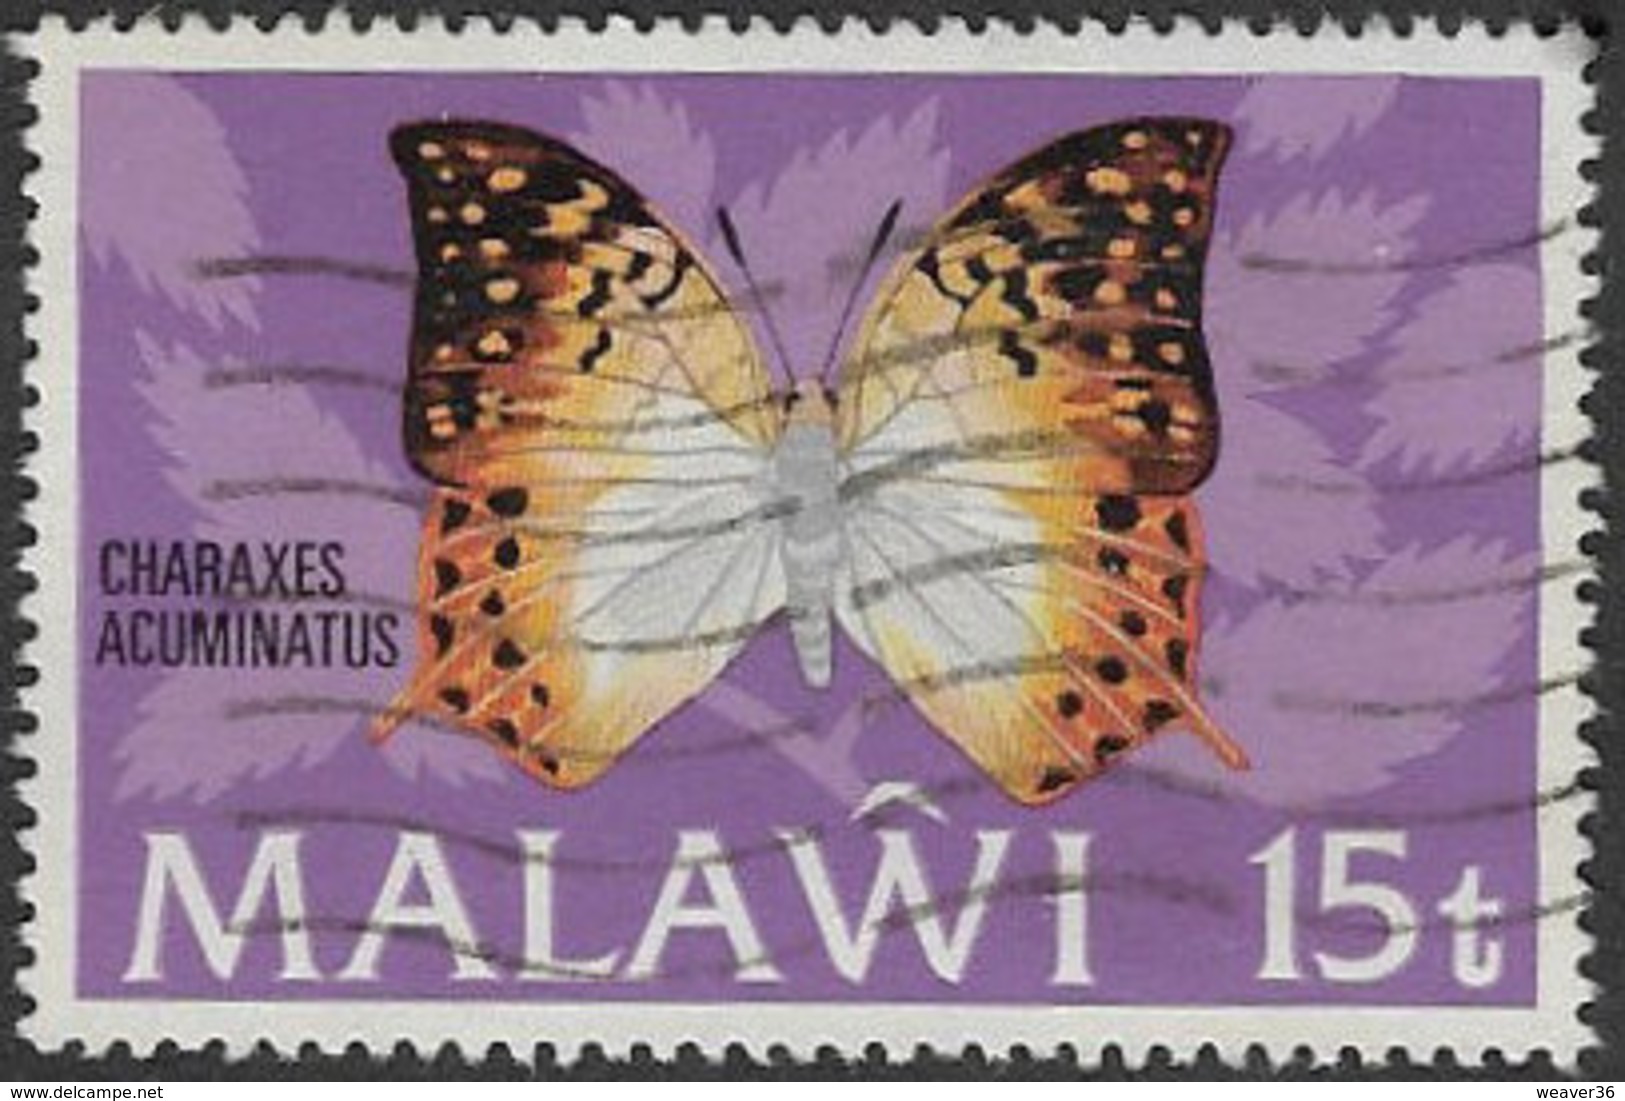 Malawi SG431 1973 Butterflies 15t Good/fine Used [37/30835/2D] - Malawi (1964-...)